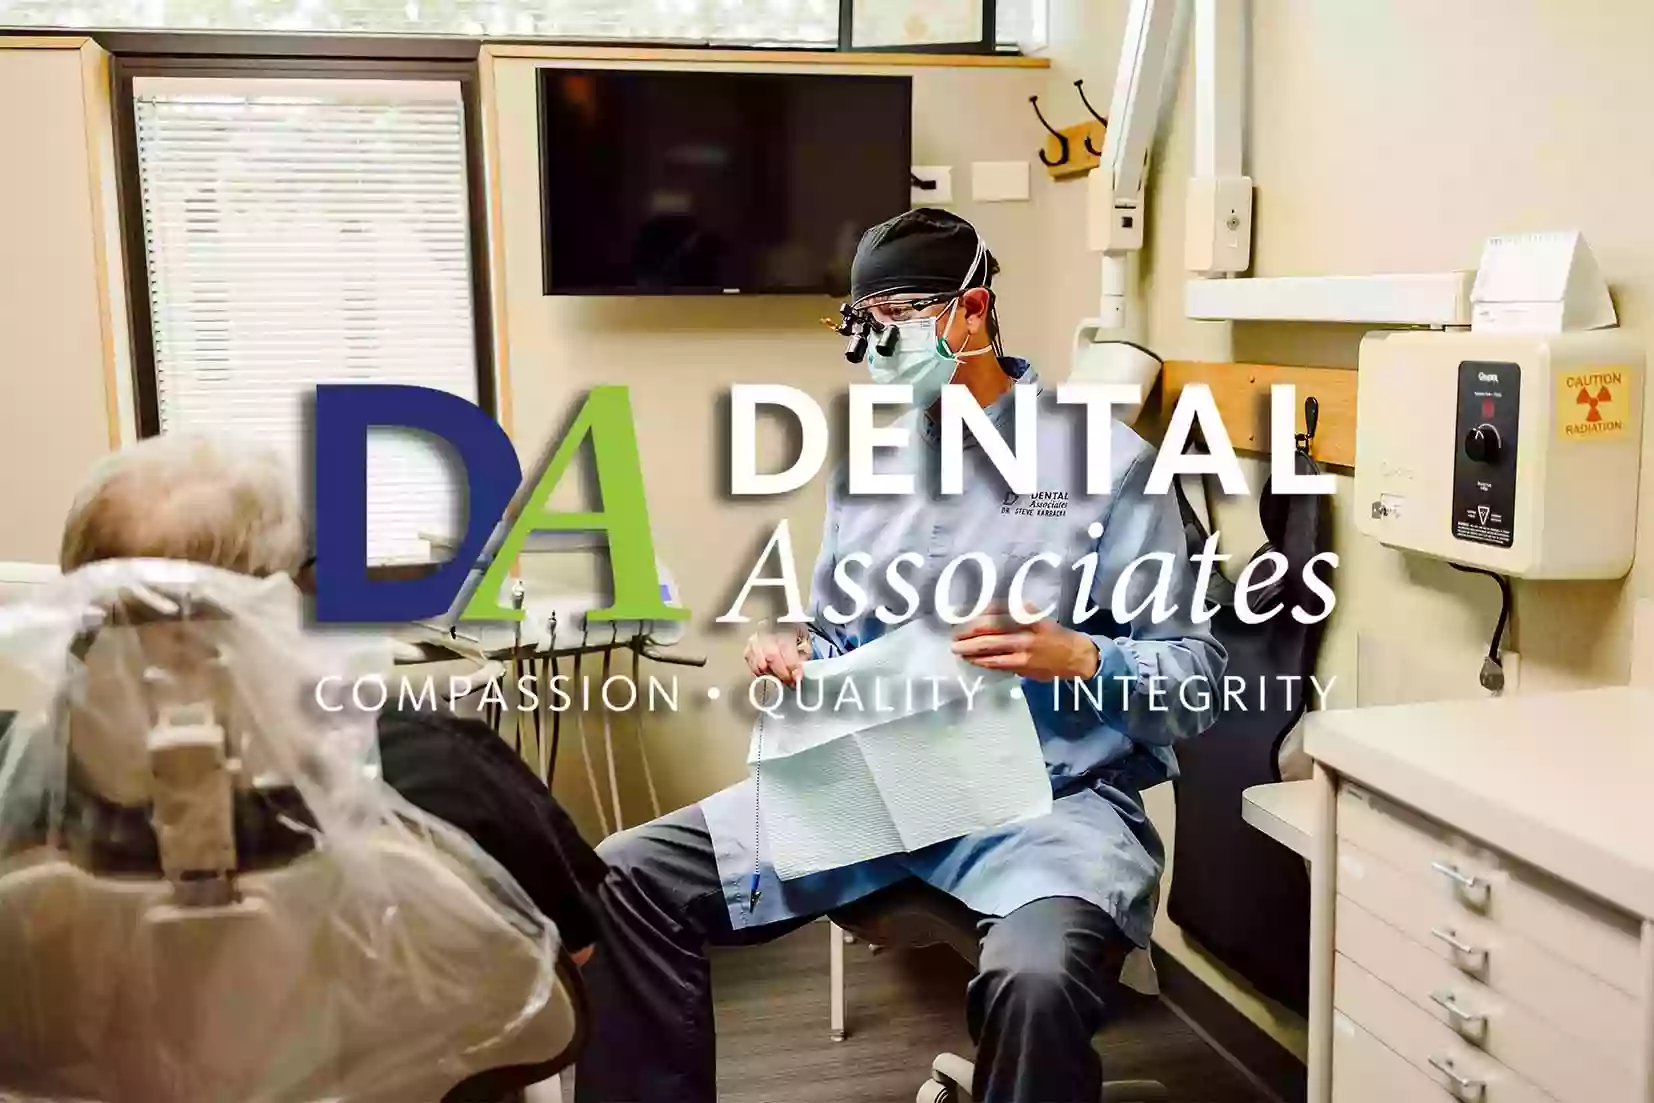 Dental Associates PC